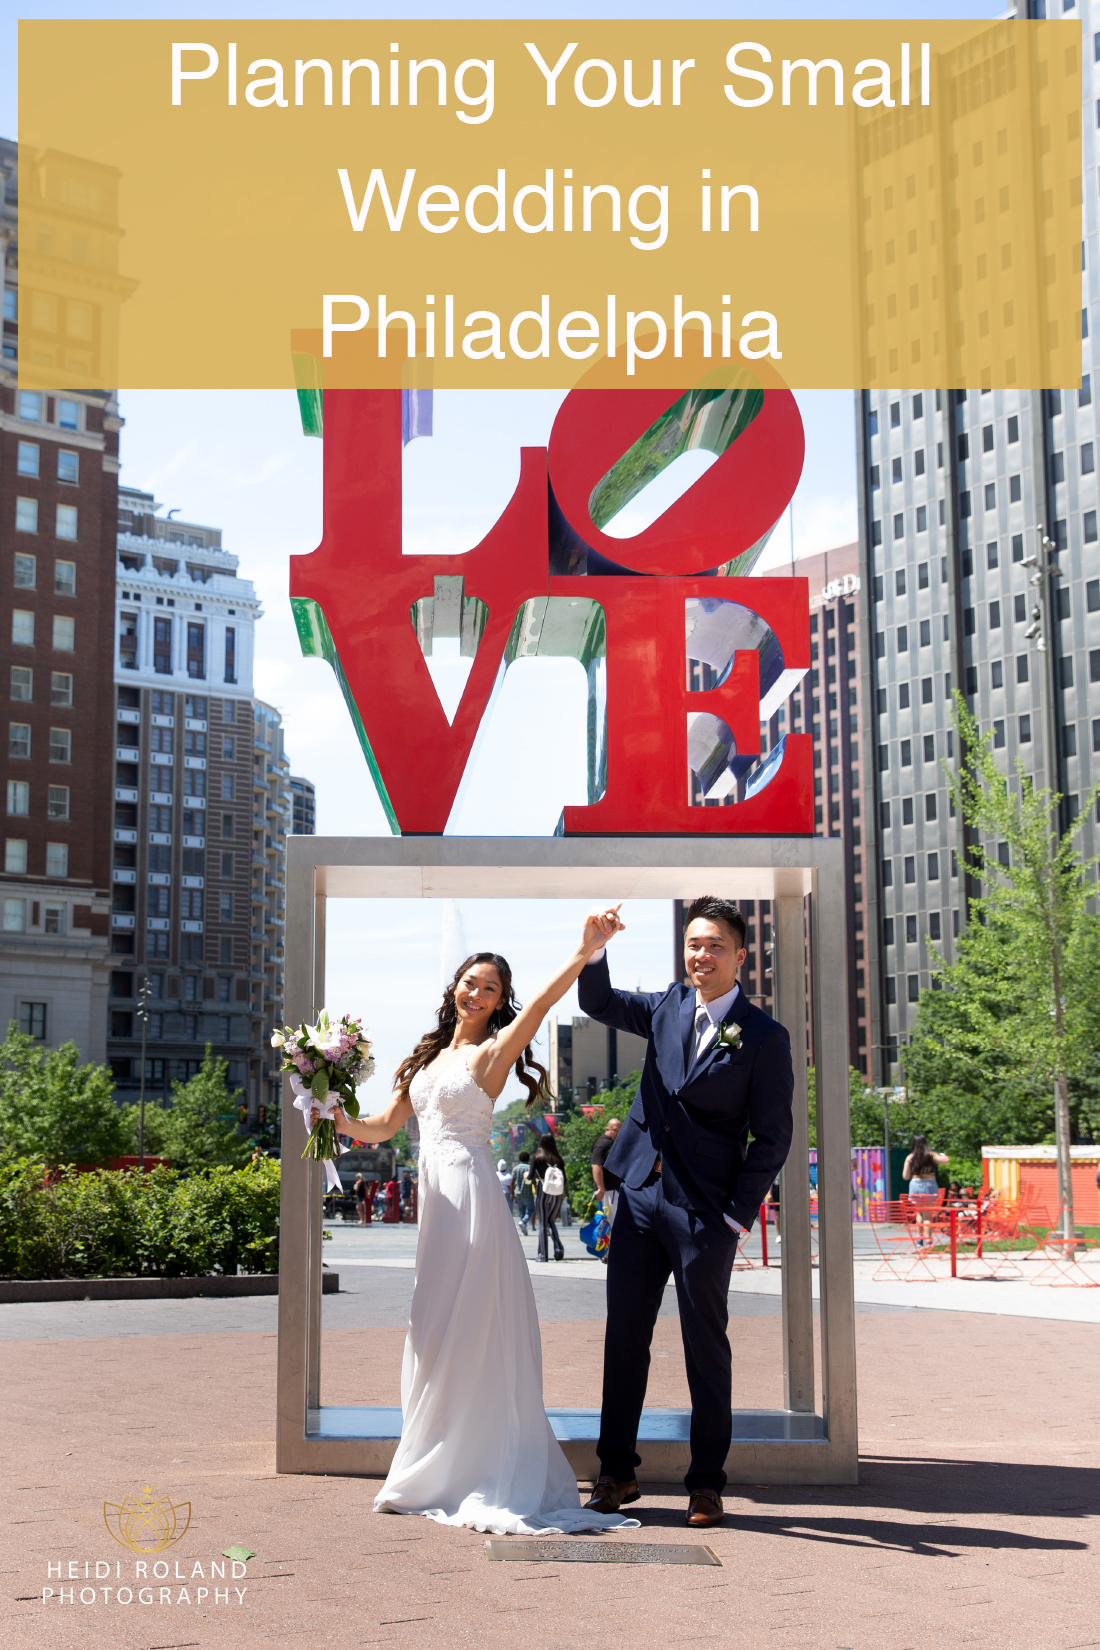 Planning your small Philadelphia wedding